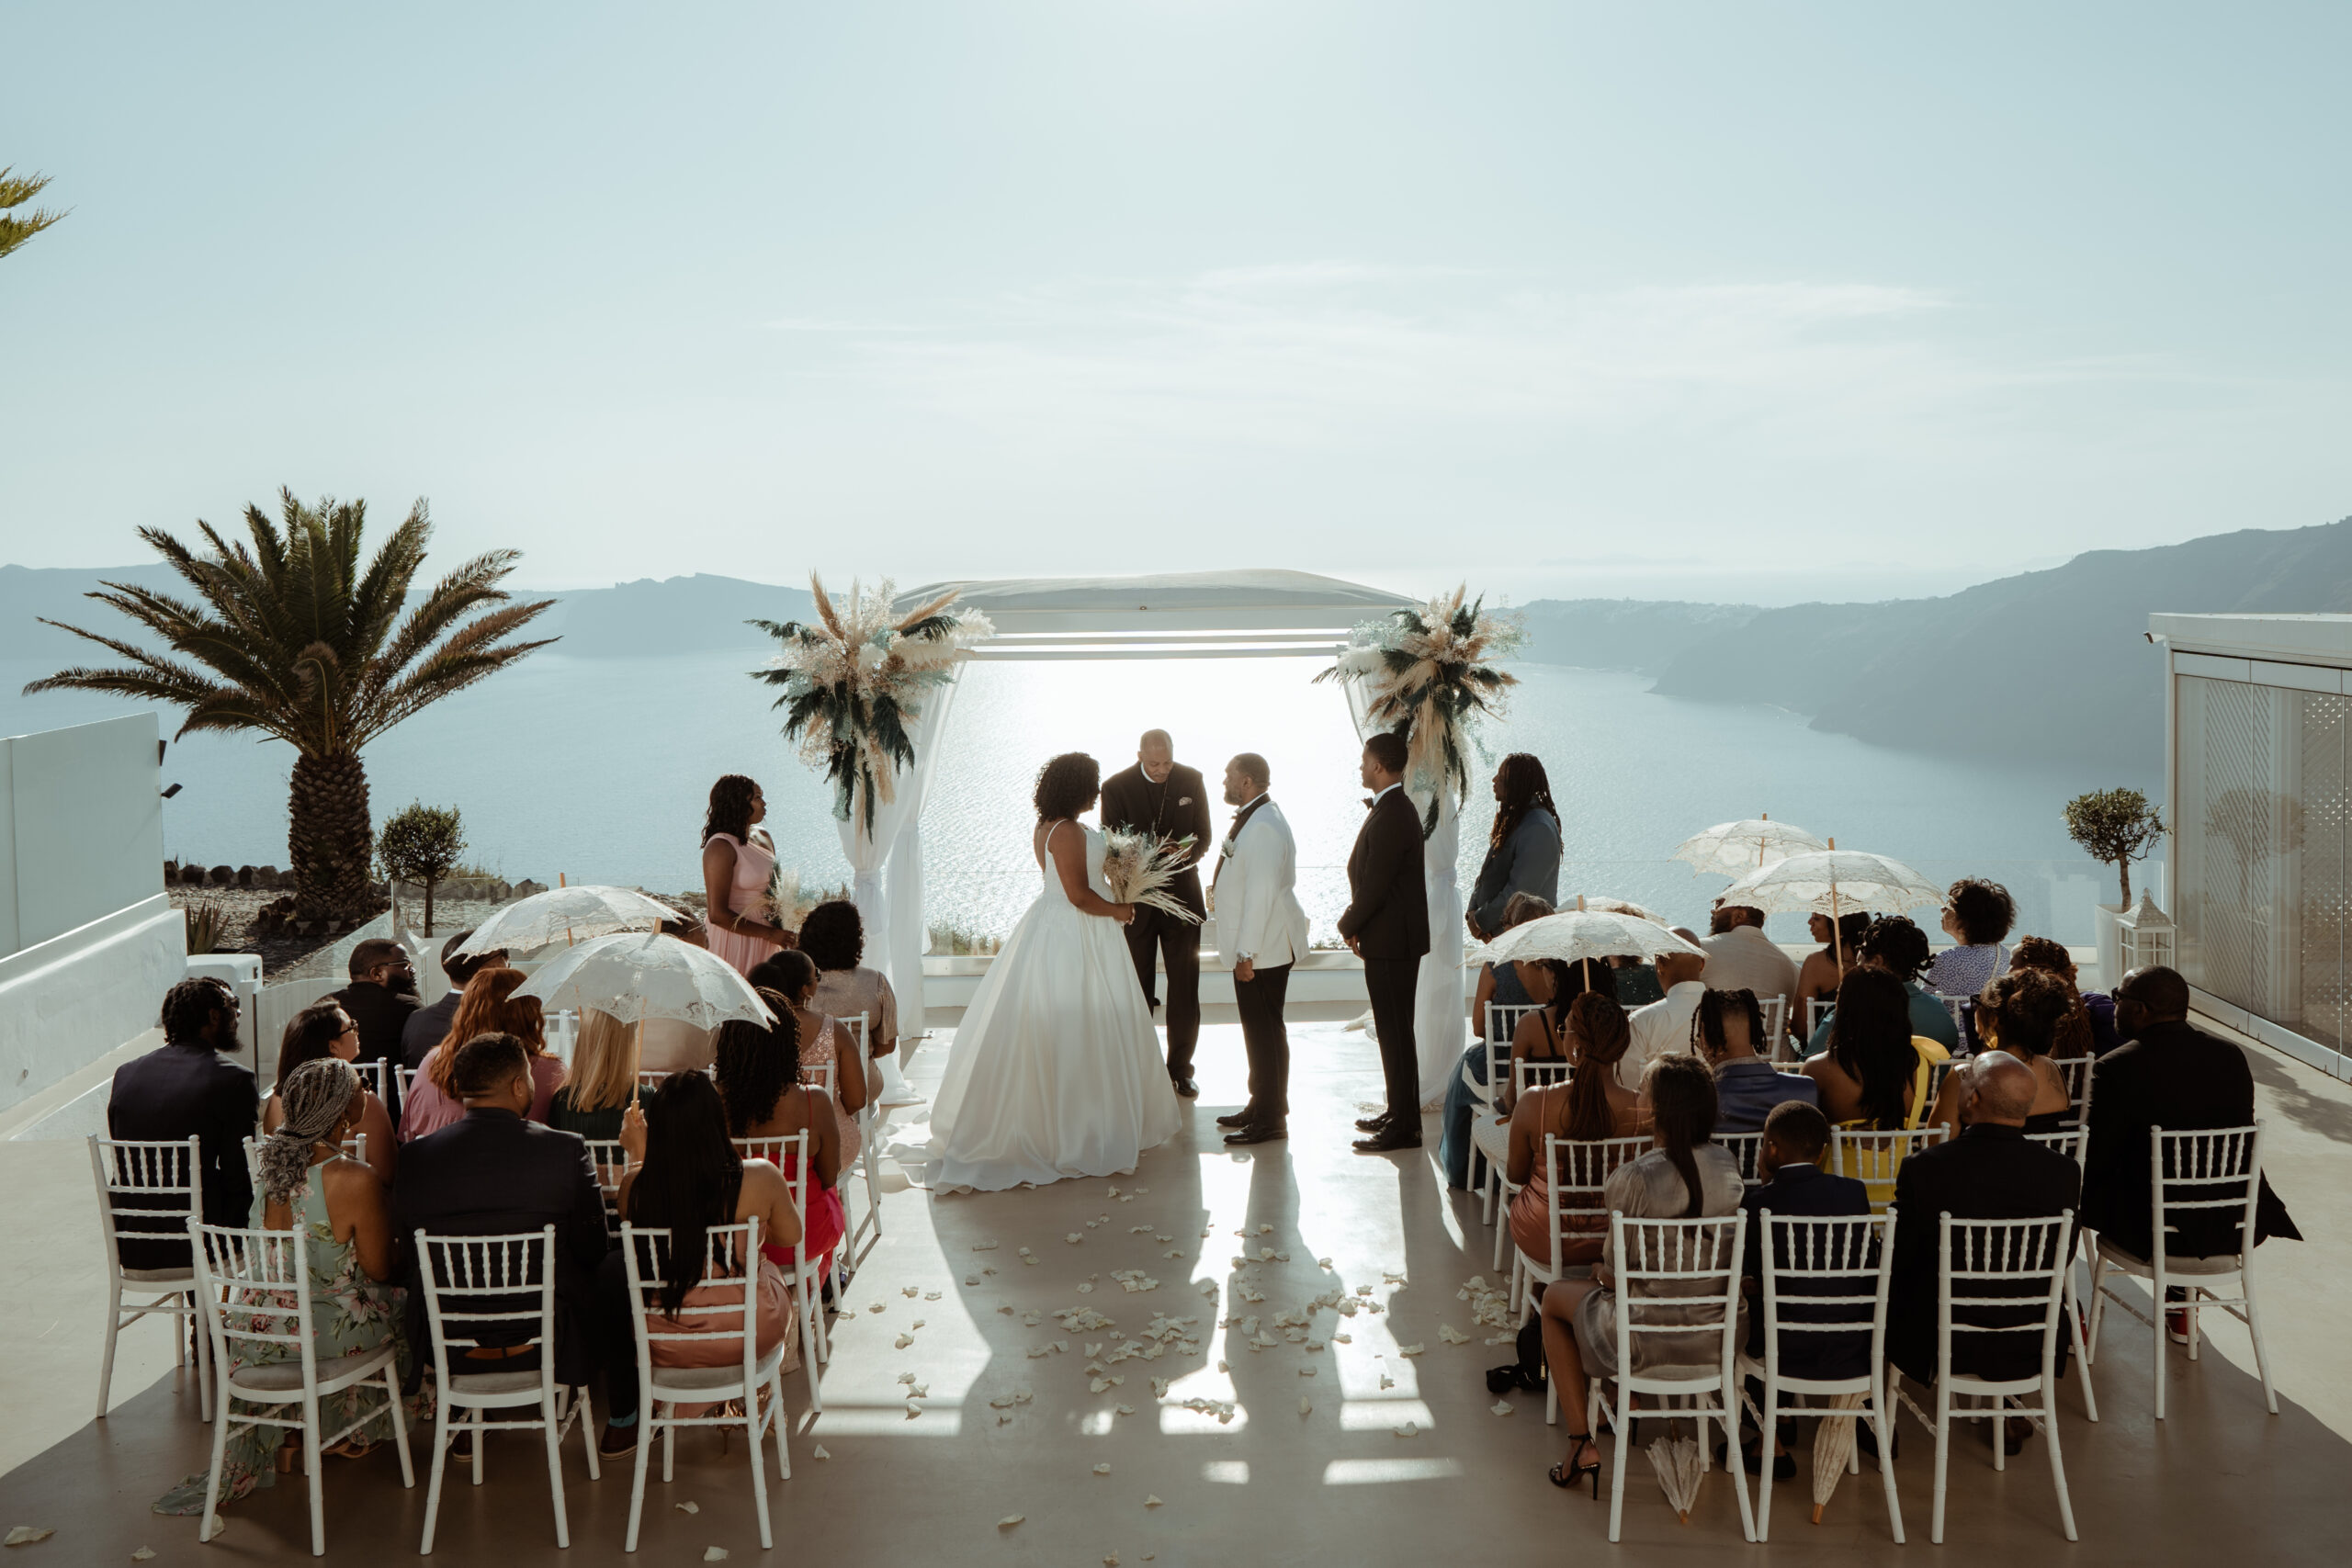 Stephanie and Vincent exchanging vows at Le Ciel Santorini